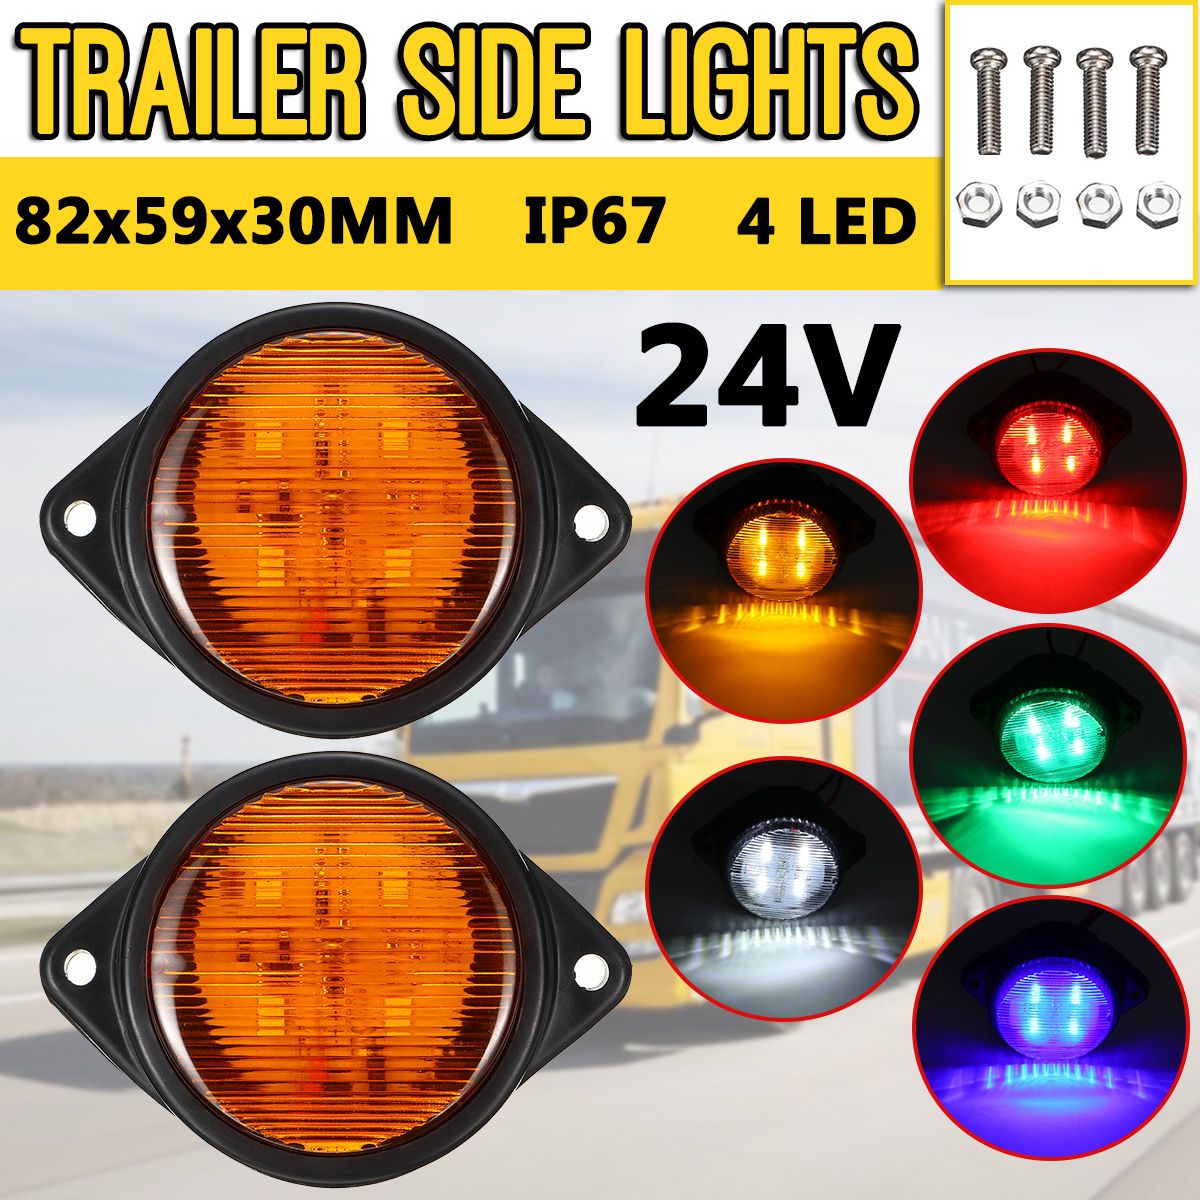 2PCS-24V-4LED-Trailer-Side-Marker-Lights-Truck-Caravan-Van-Stop-Indicator-Light-1742177